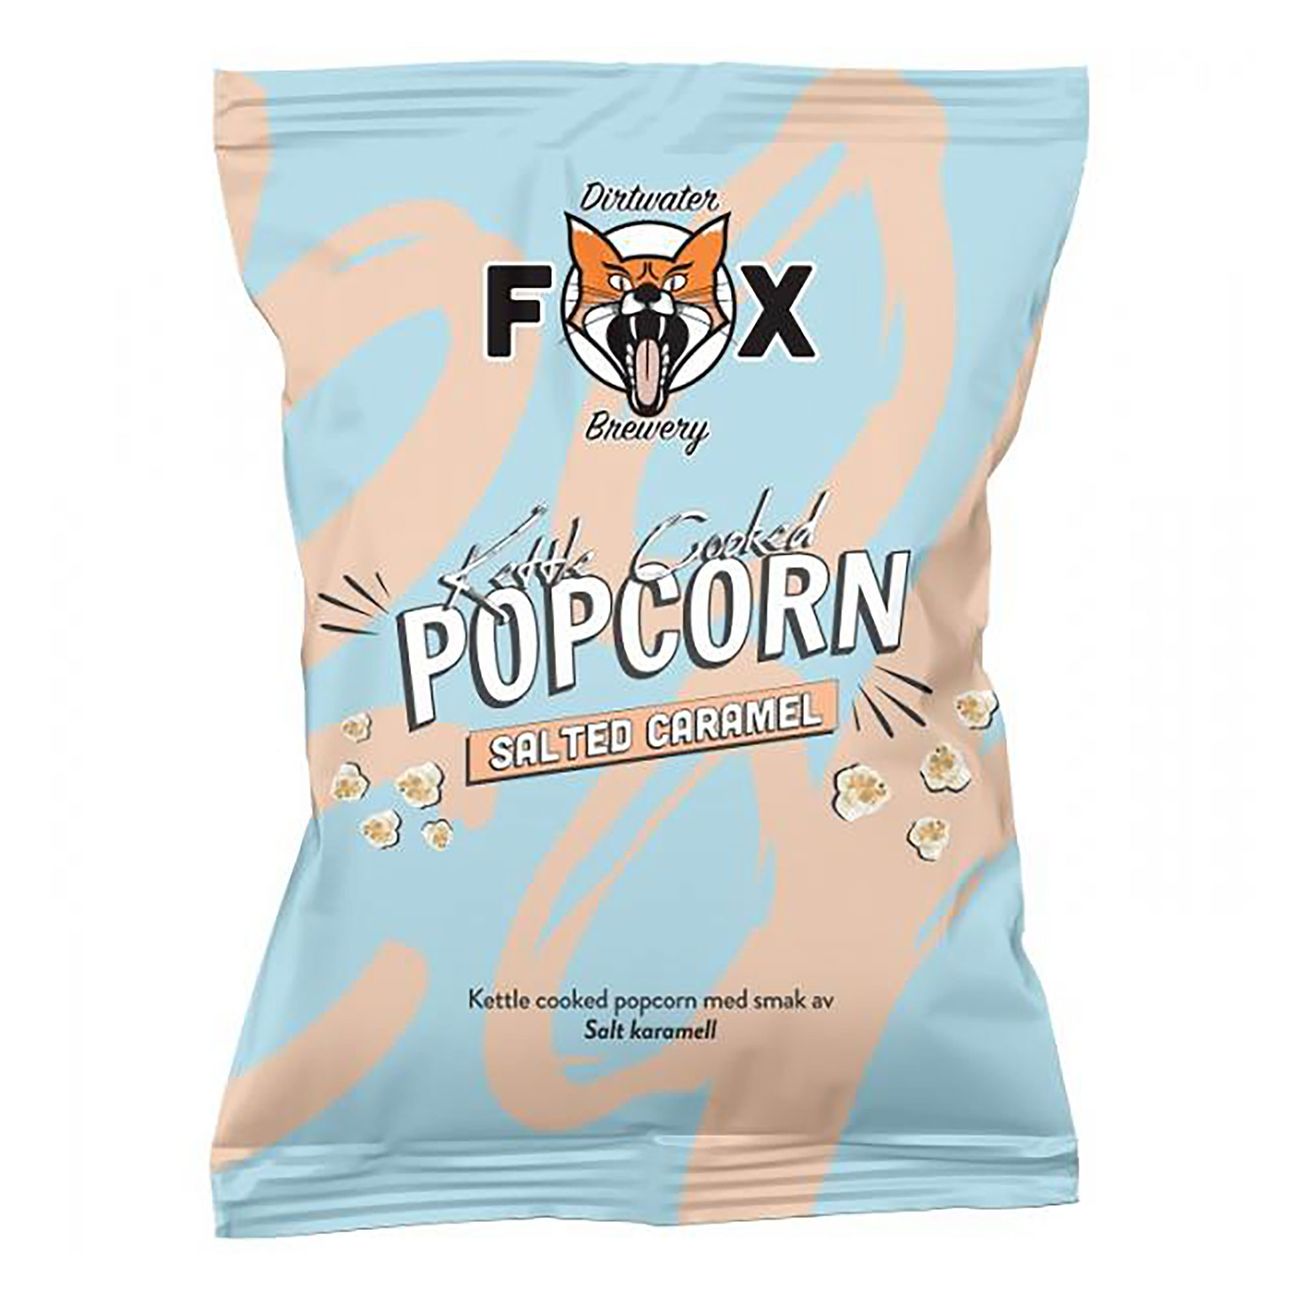 dirtwater-fox-popcorn-salted-caramel-83733-1